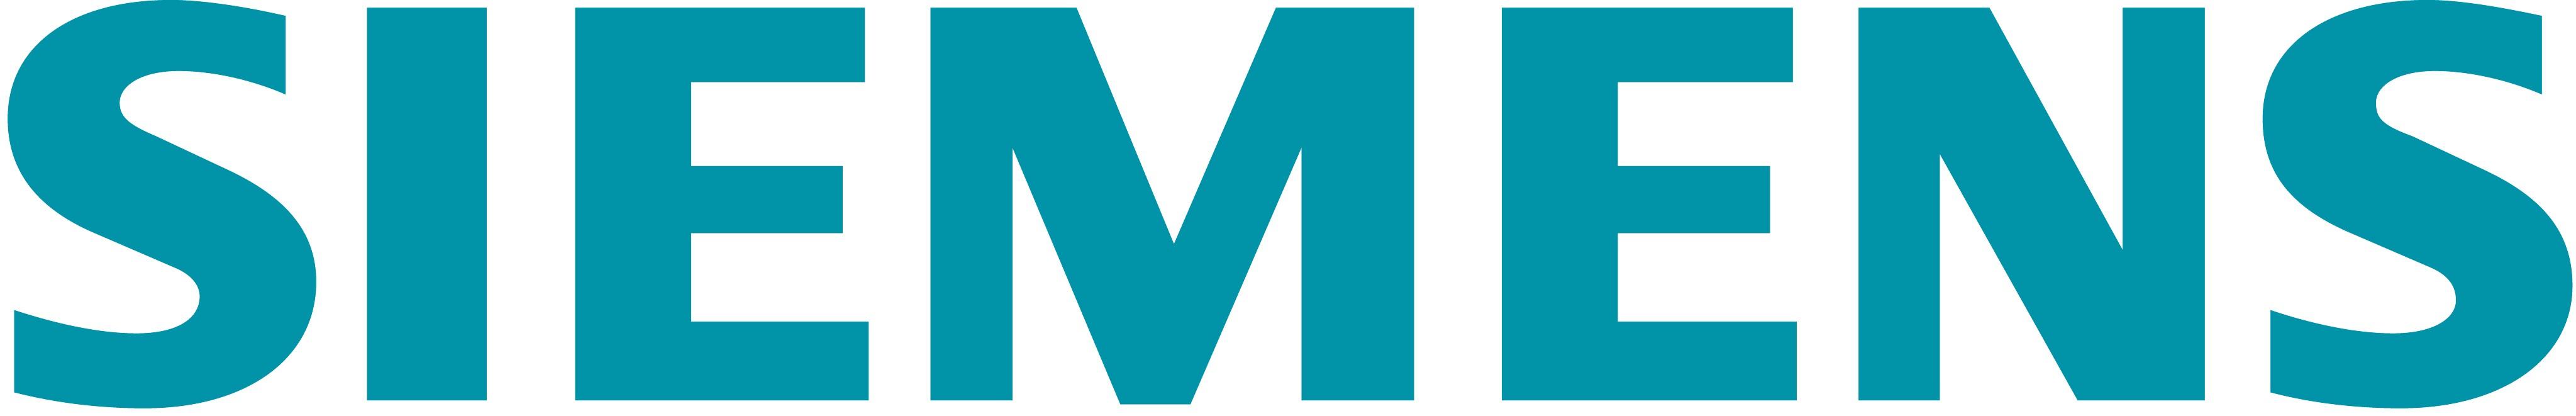 Siemens Logotype